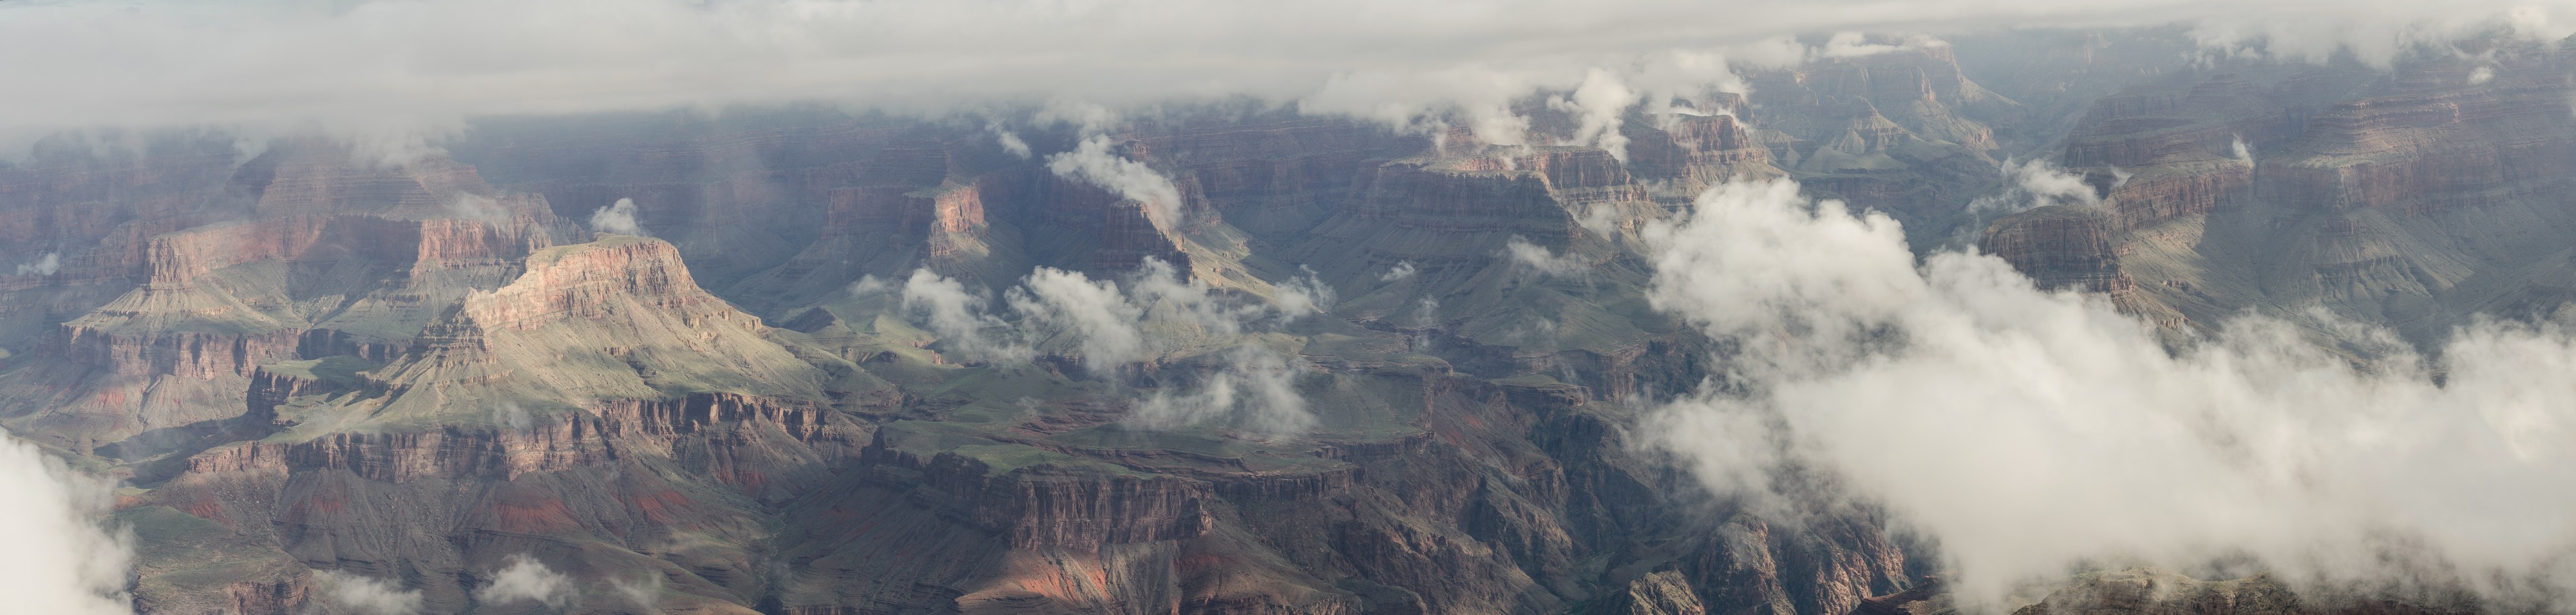 Grand Canyon Mather Point Cloudy Panorama 2013